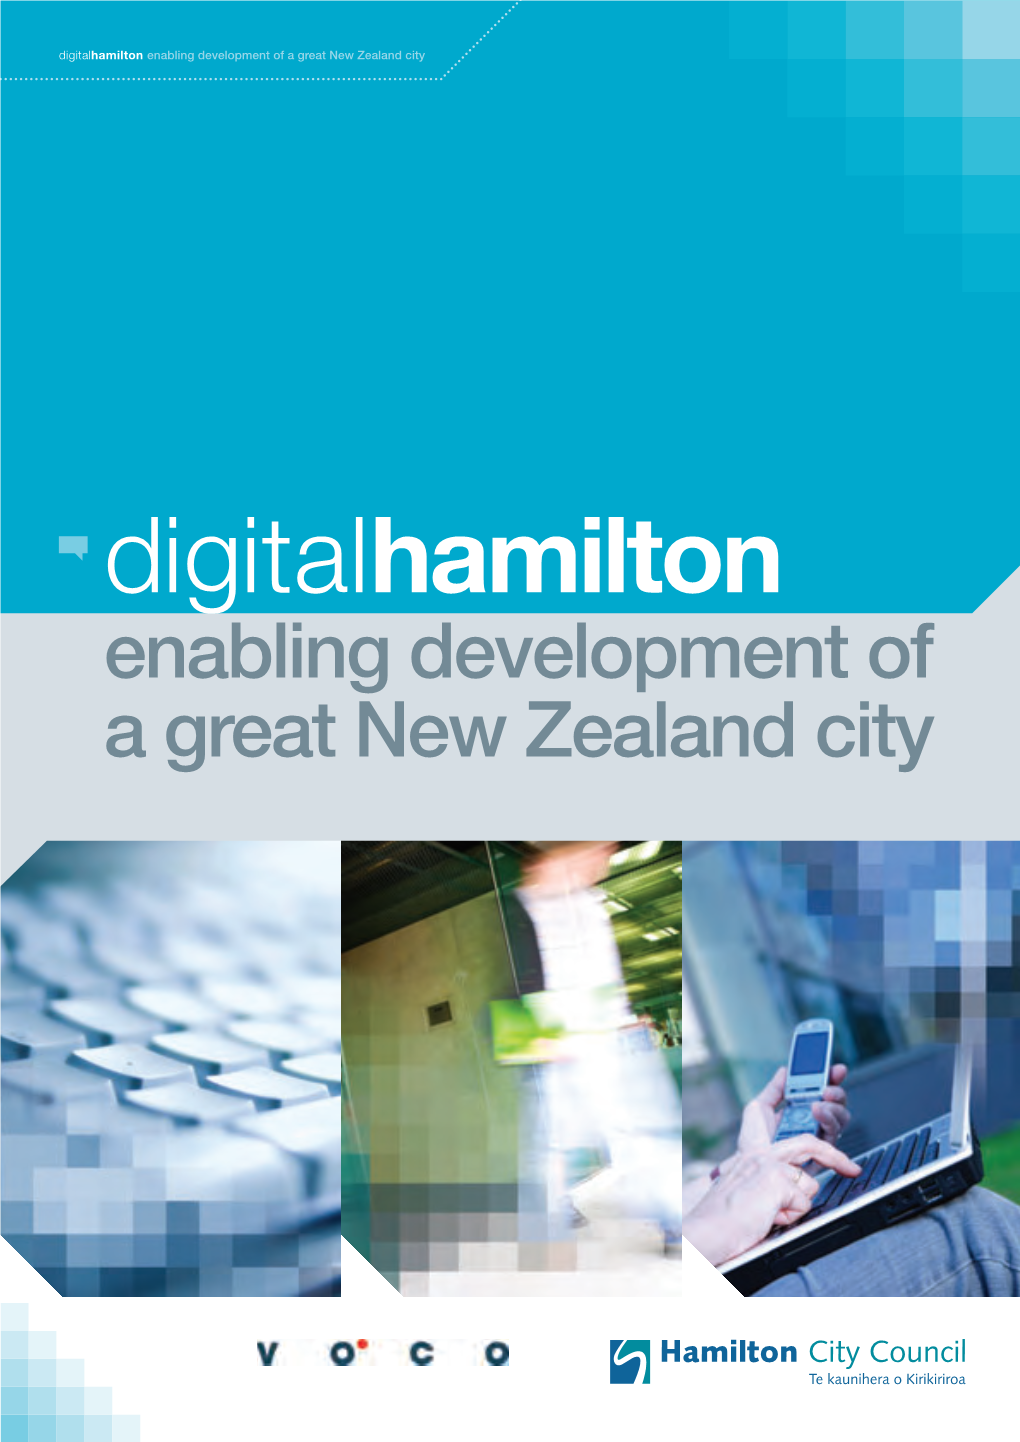 Digitalhamilton Enabling Development of a Great New Zealand City